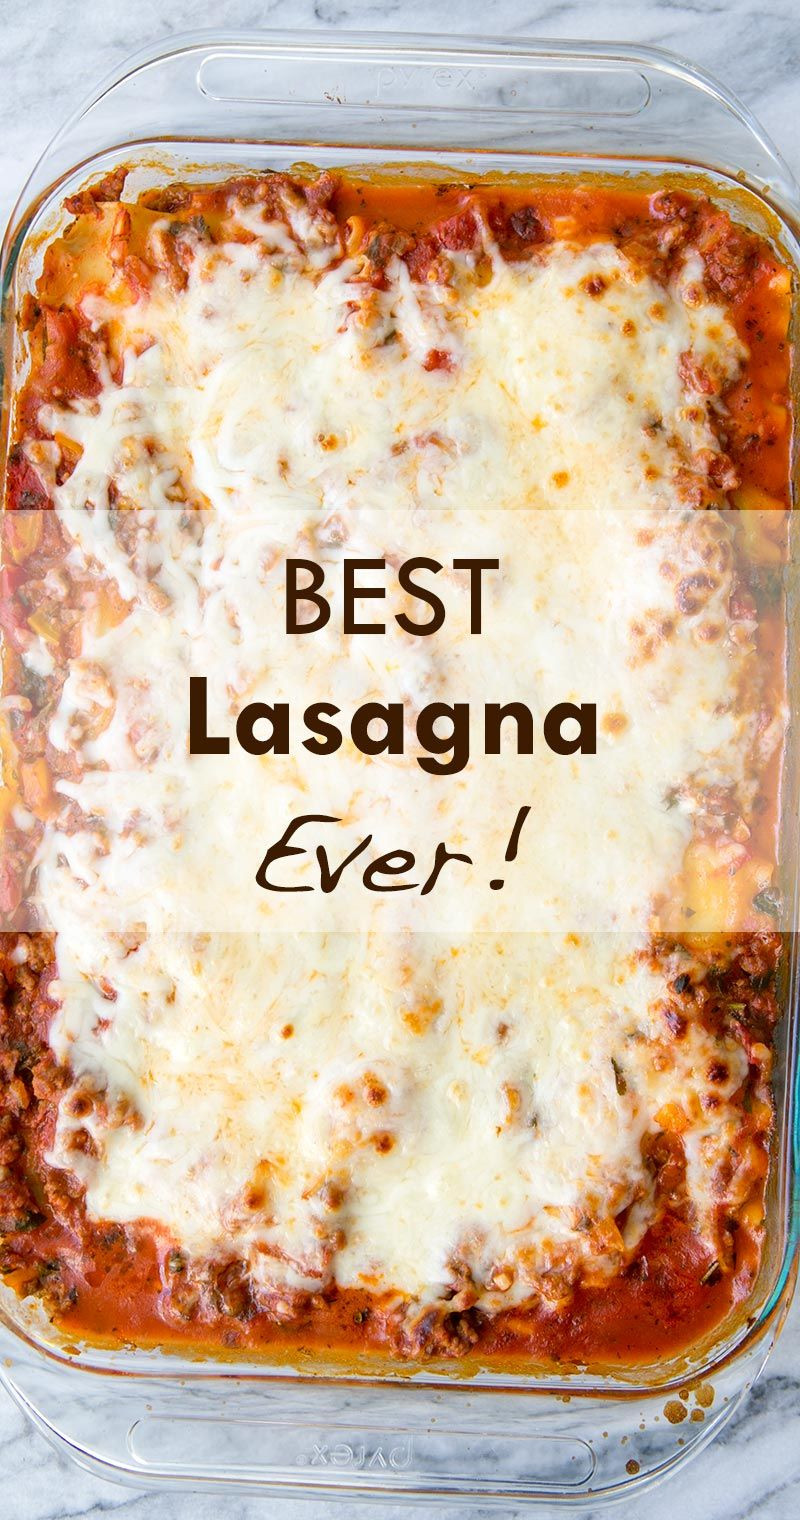 Easy Lasagna Recipe With Cottage Cheese
 Lasagna Recipe in 2019